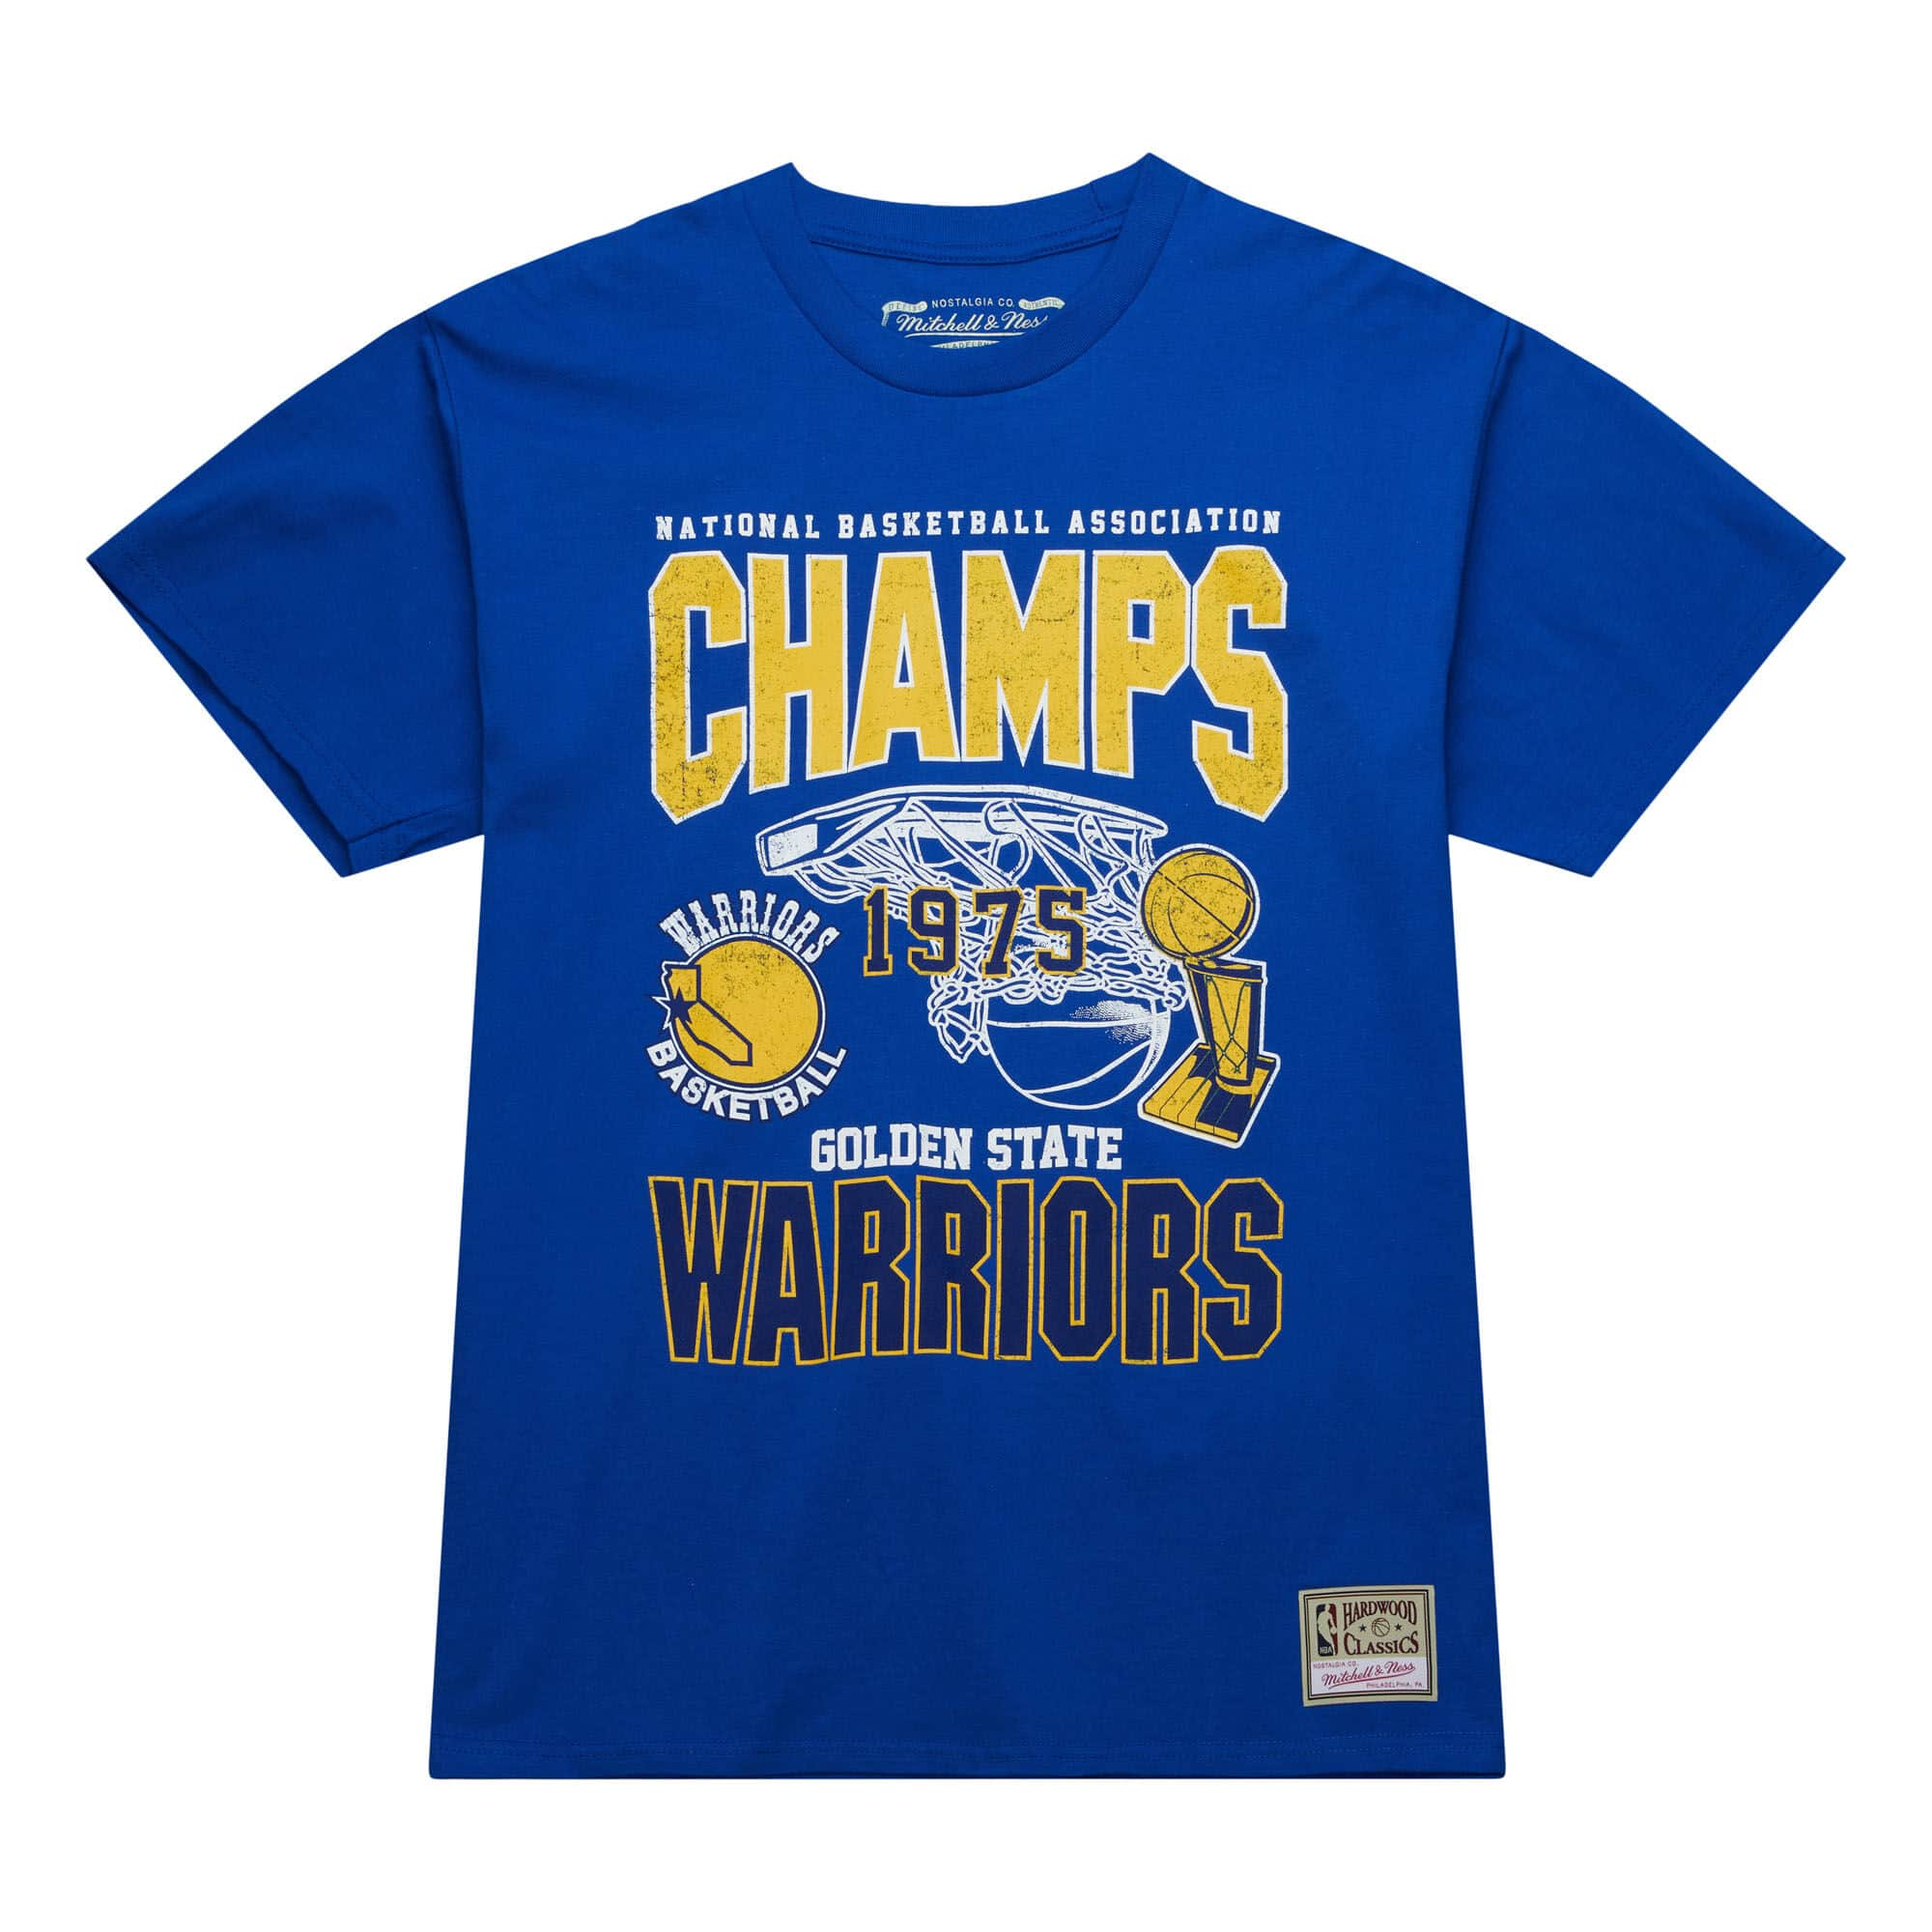 Where to buy Golden State Warriors NBA Championship merchandise